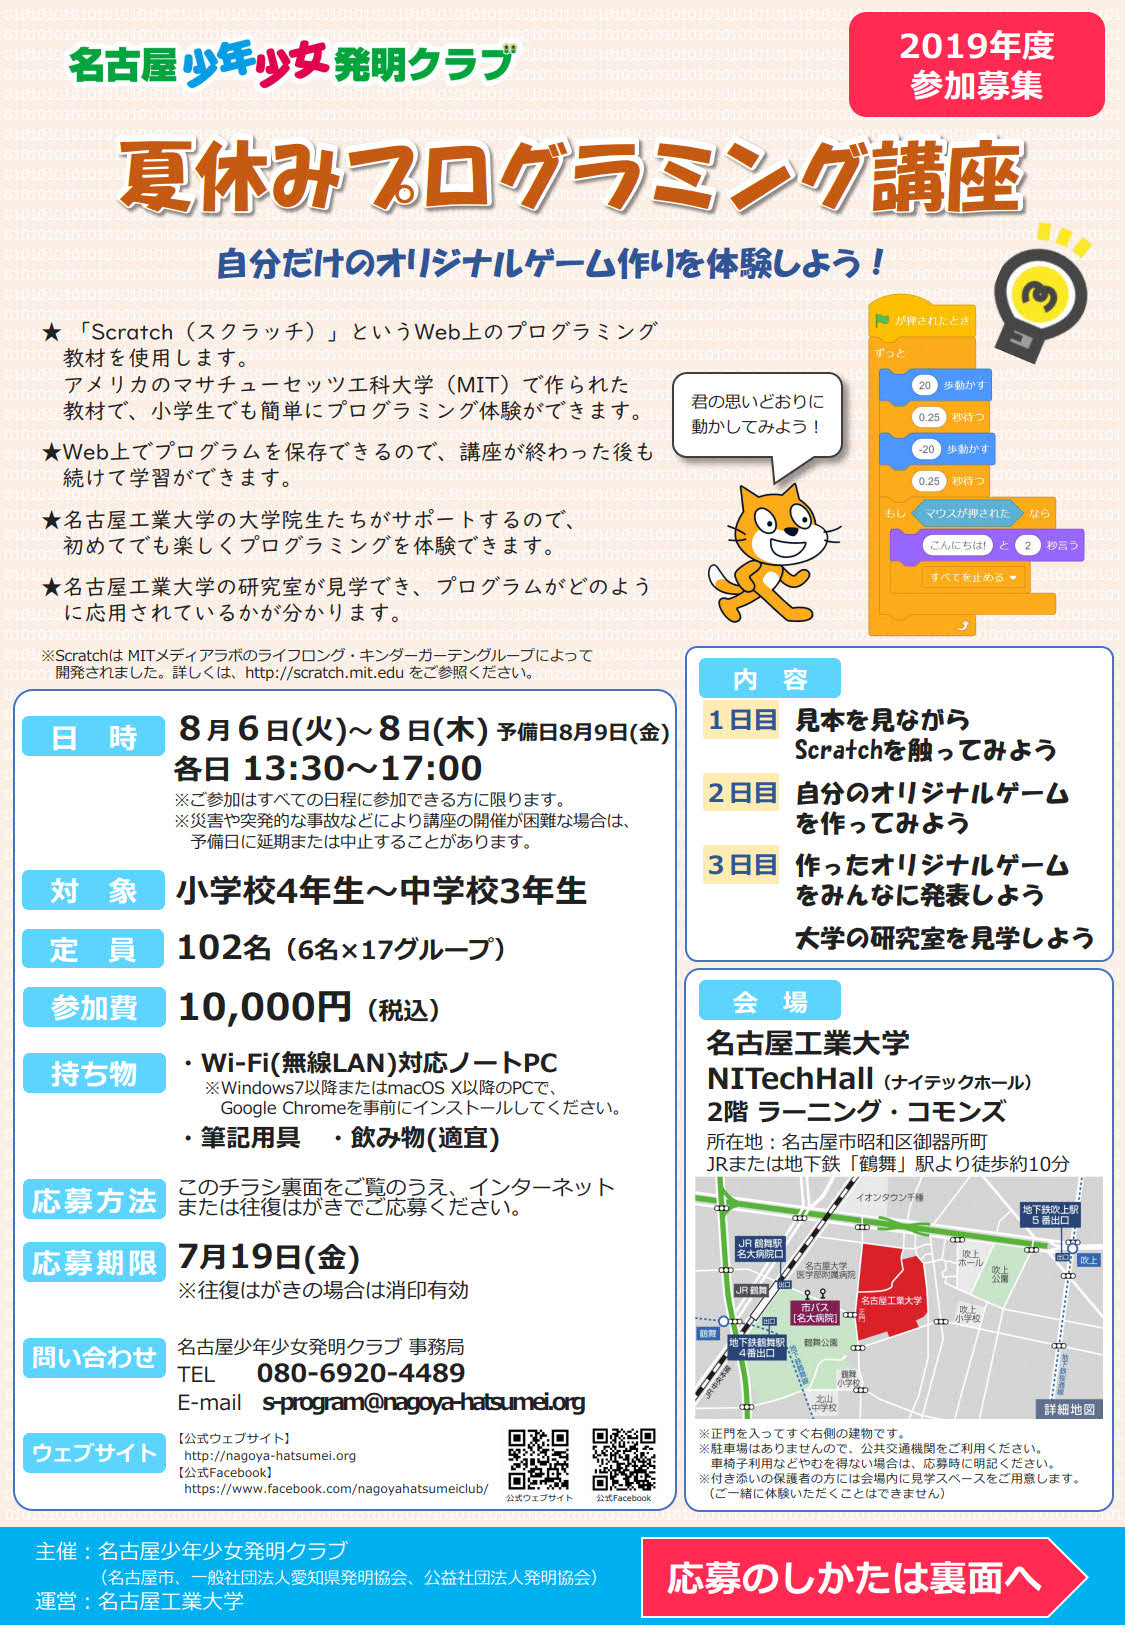 https://www.nitech.ac.jp/event/mt_imgs/chiarashi-s-program-2019_1.jpg